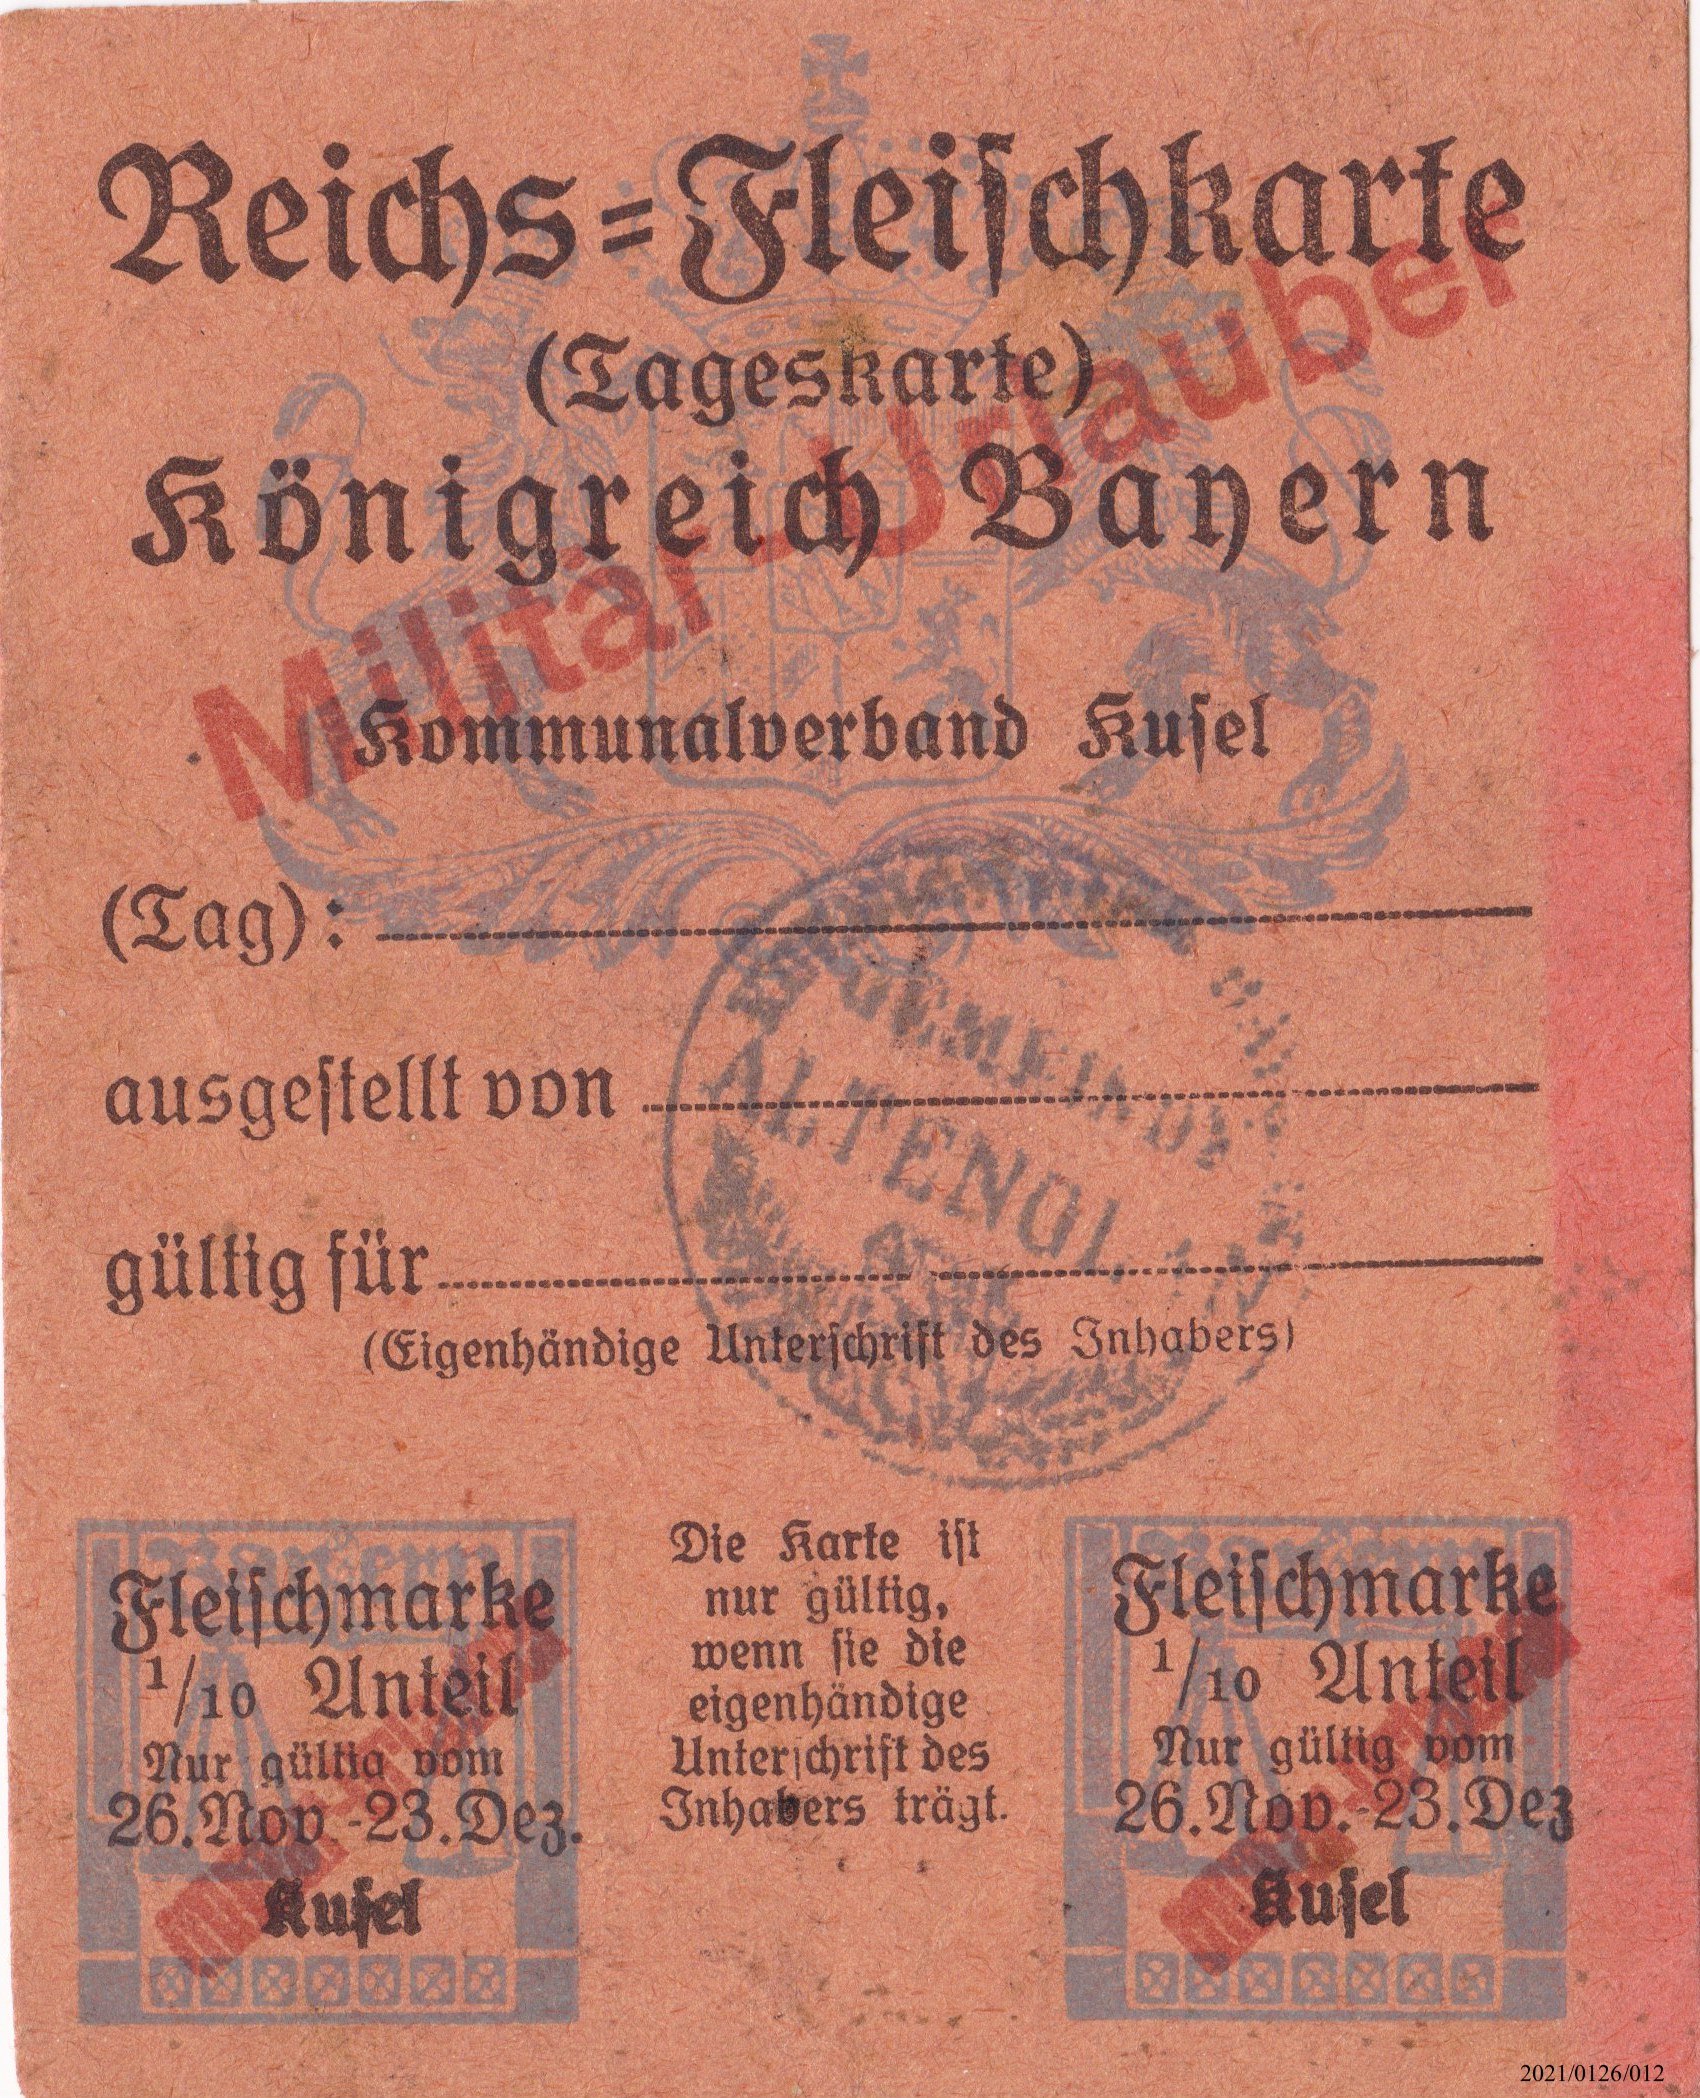 Reichs-Fleischkarte (Tagesmarke) Königreich Bayern Kommunalverband Kusel 1918(?) (Museumsgesellschaft Bad Dürkheim e. V. CC BY-NC-SA)